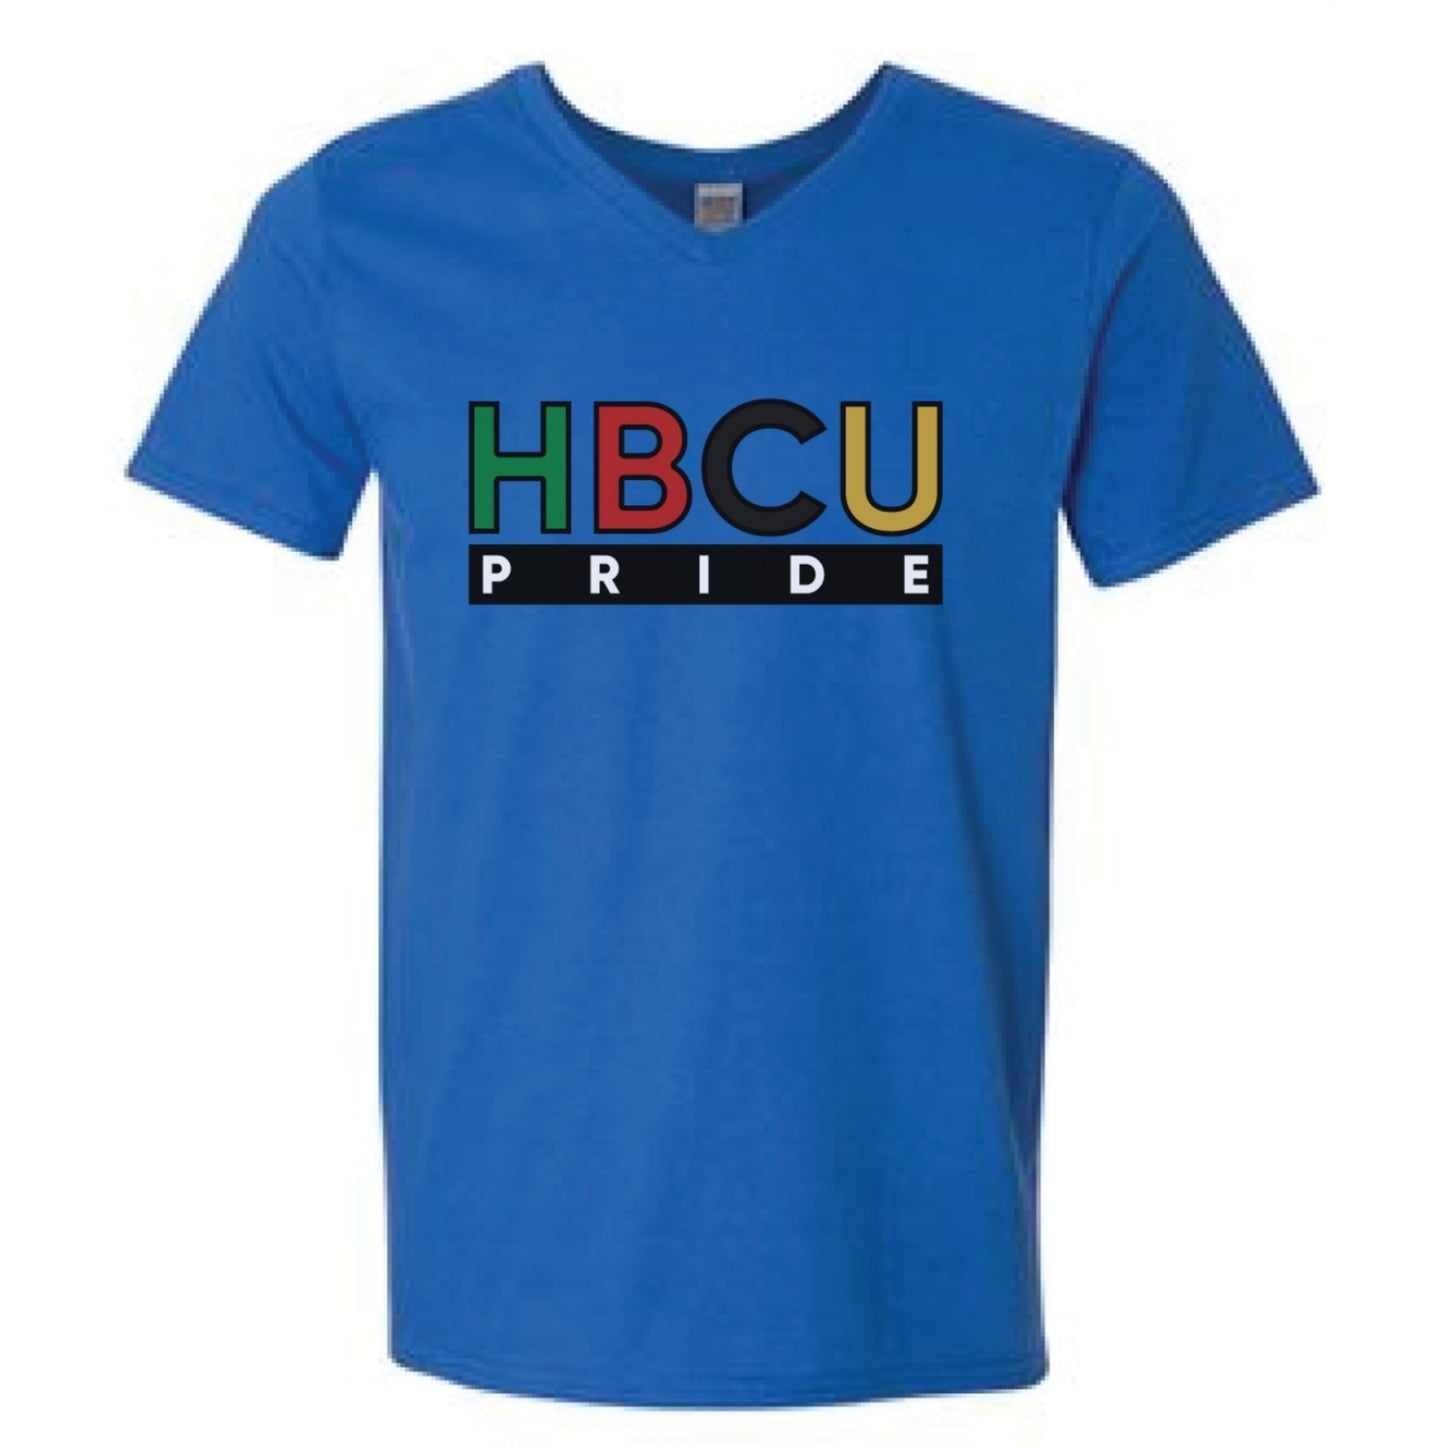 HBCU Pride Tee in Blue